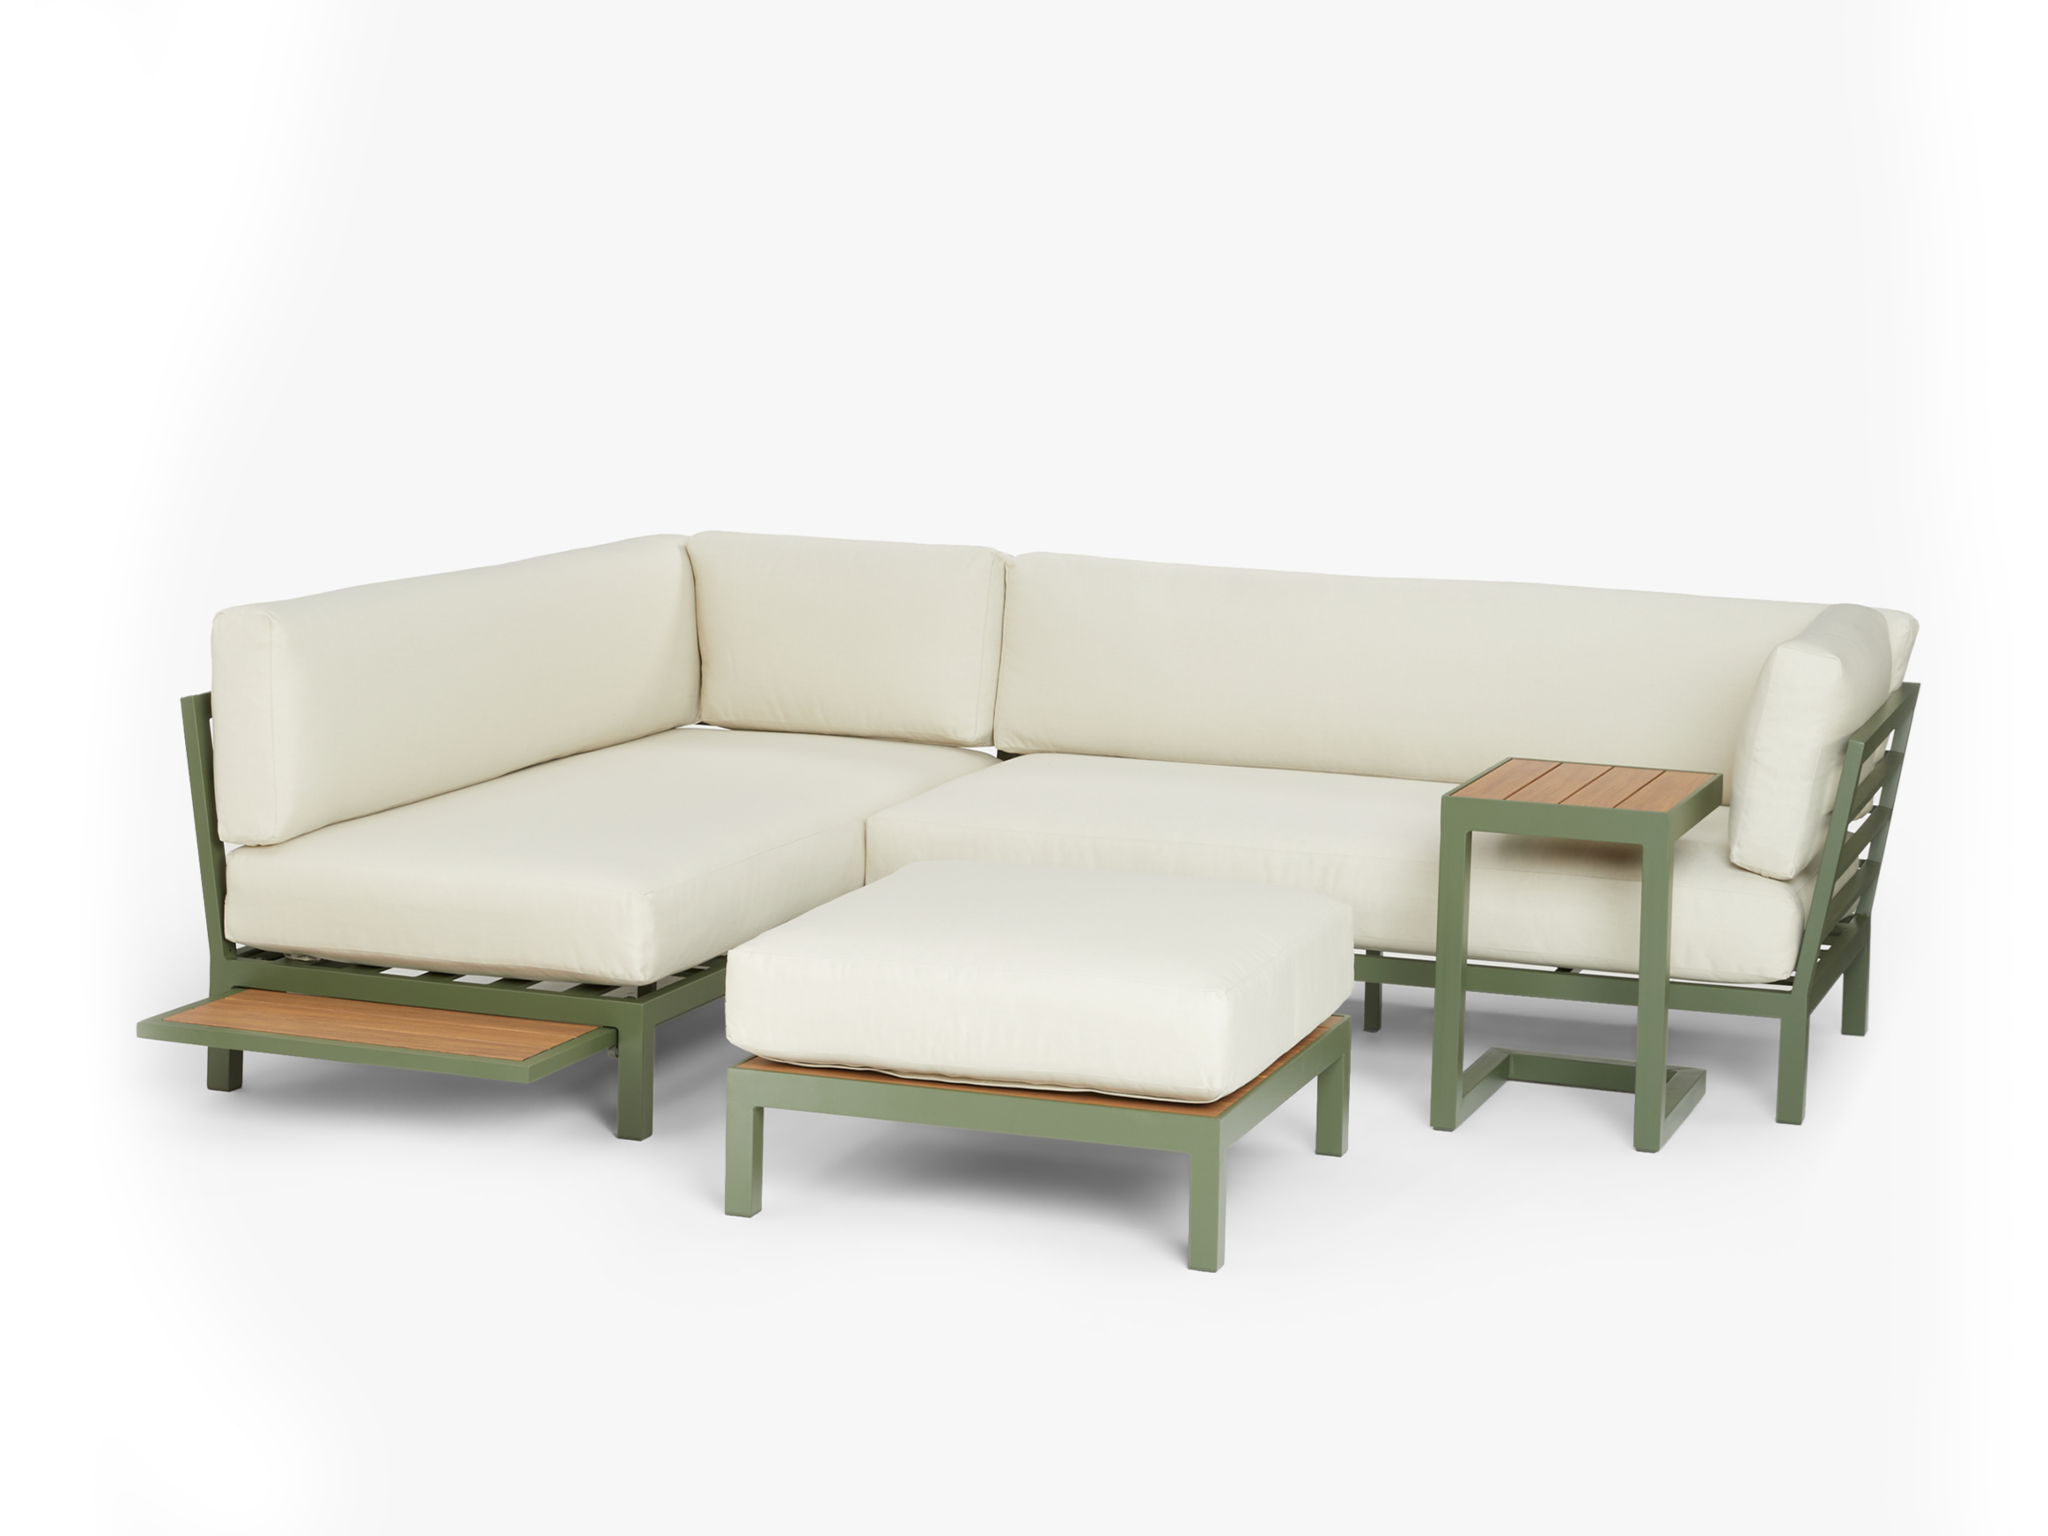 John Lewis & Partners platform 4-seater modular garden lounging set